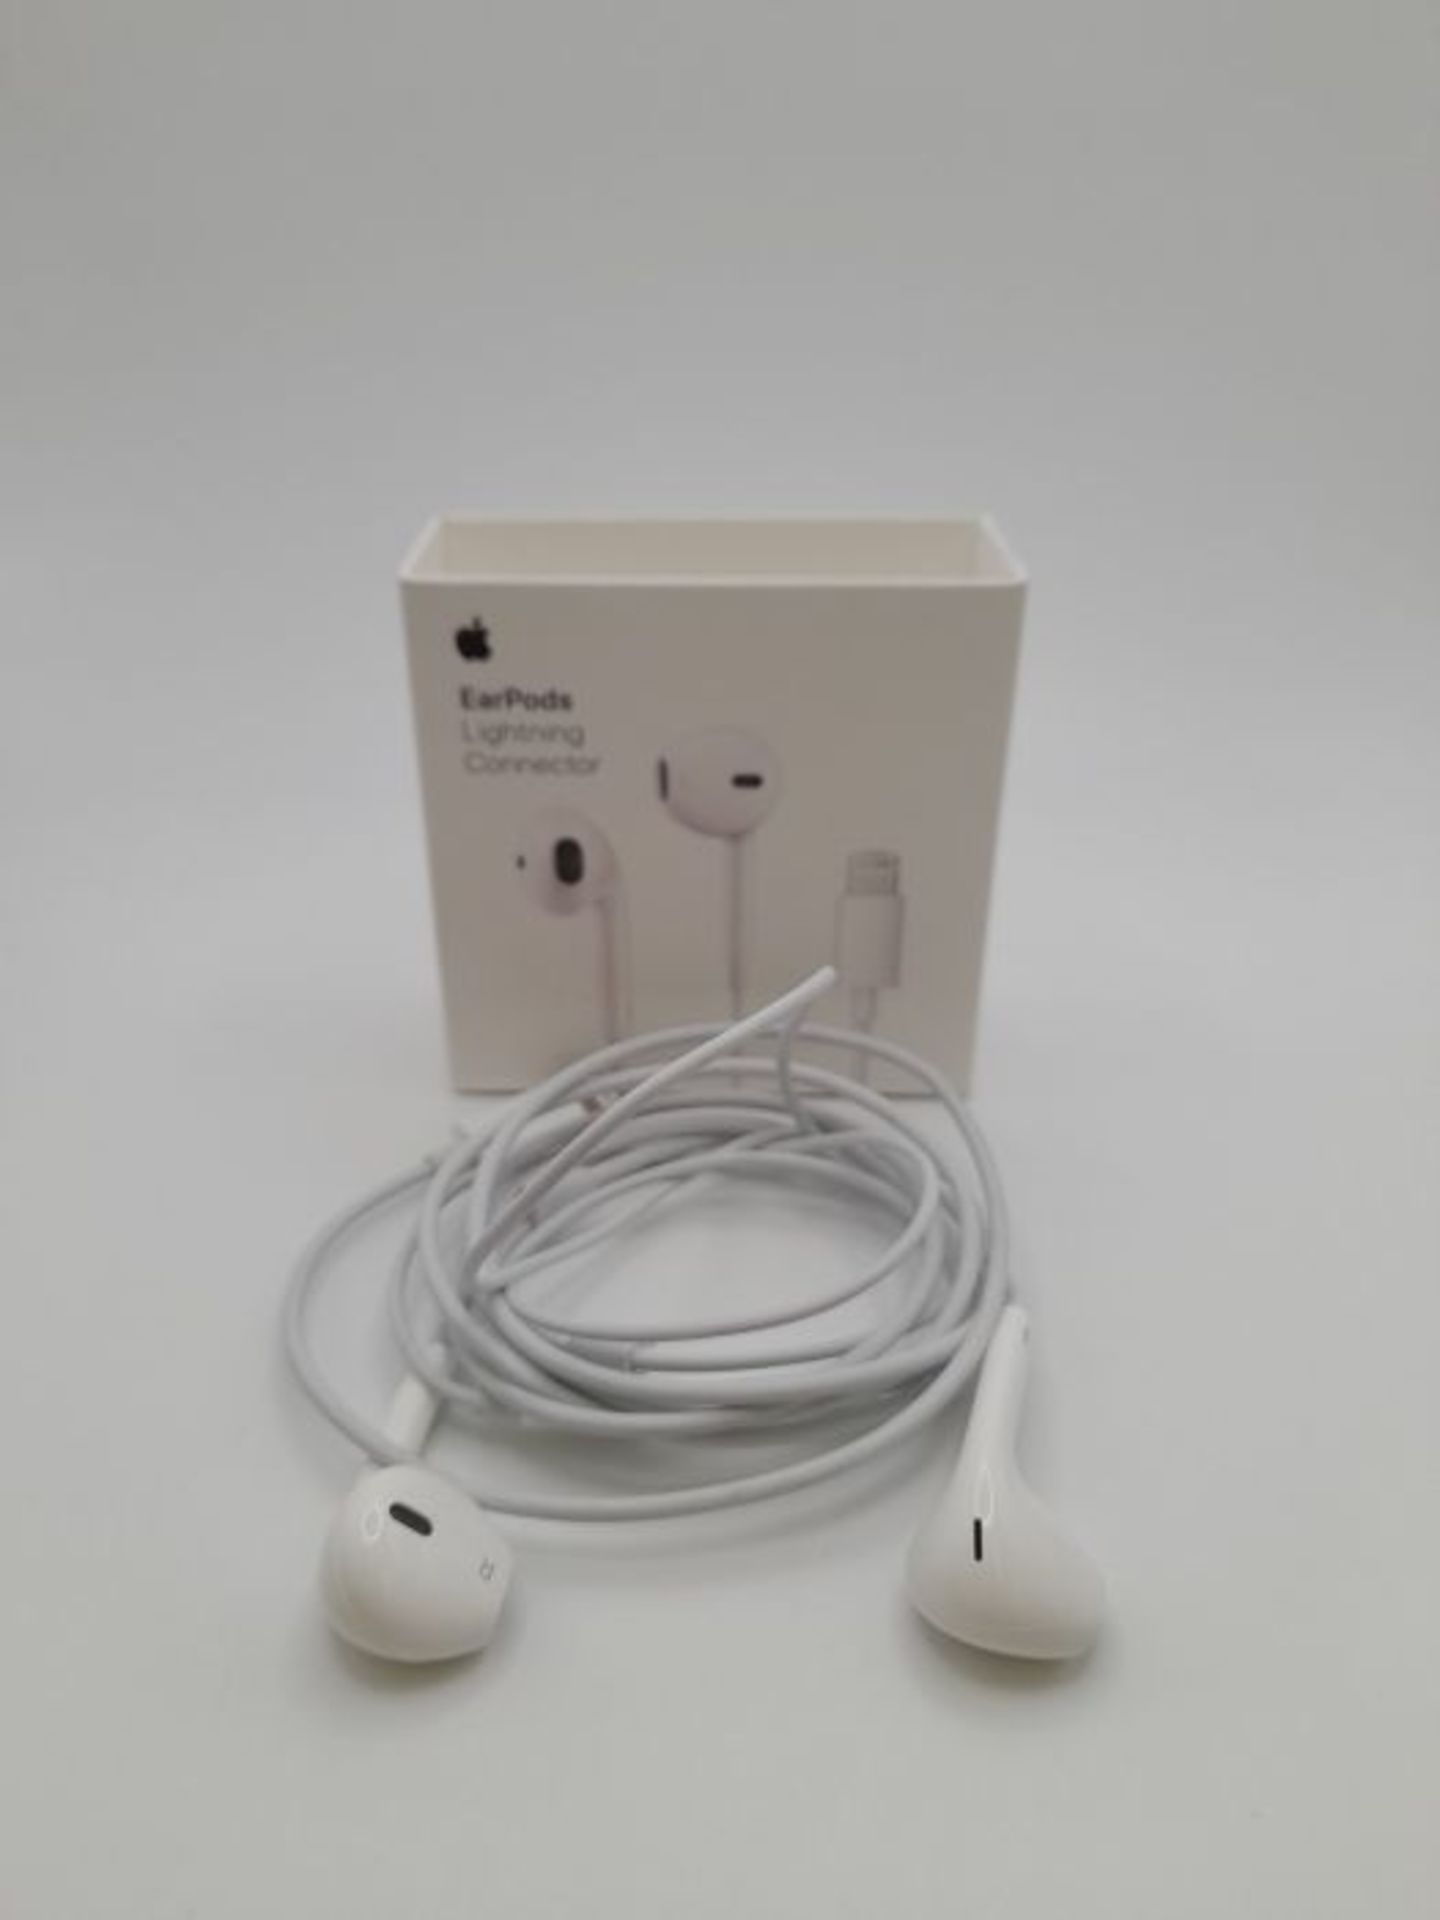 Auricolari Apple EarPods con connettore Lightning - Image 2 of 3